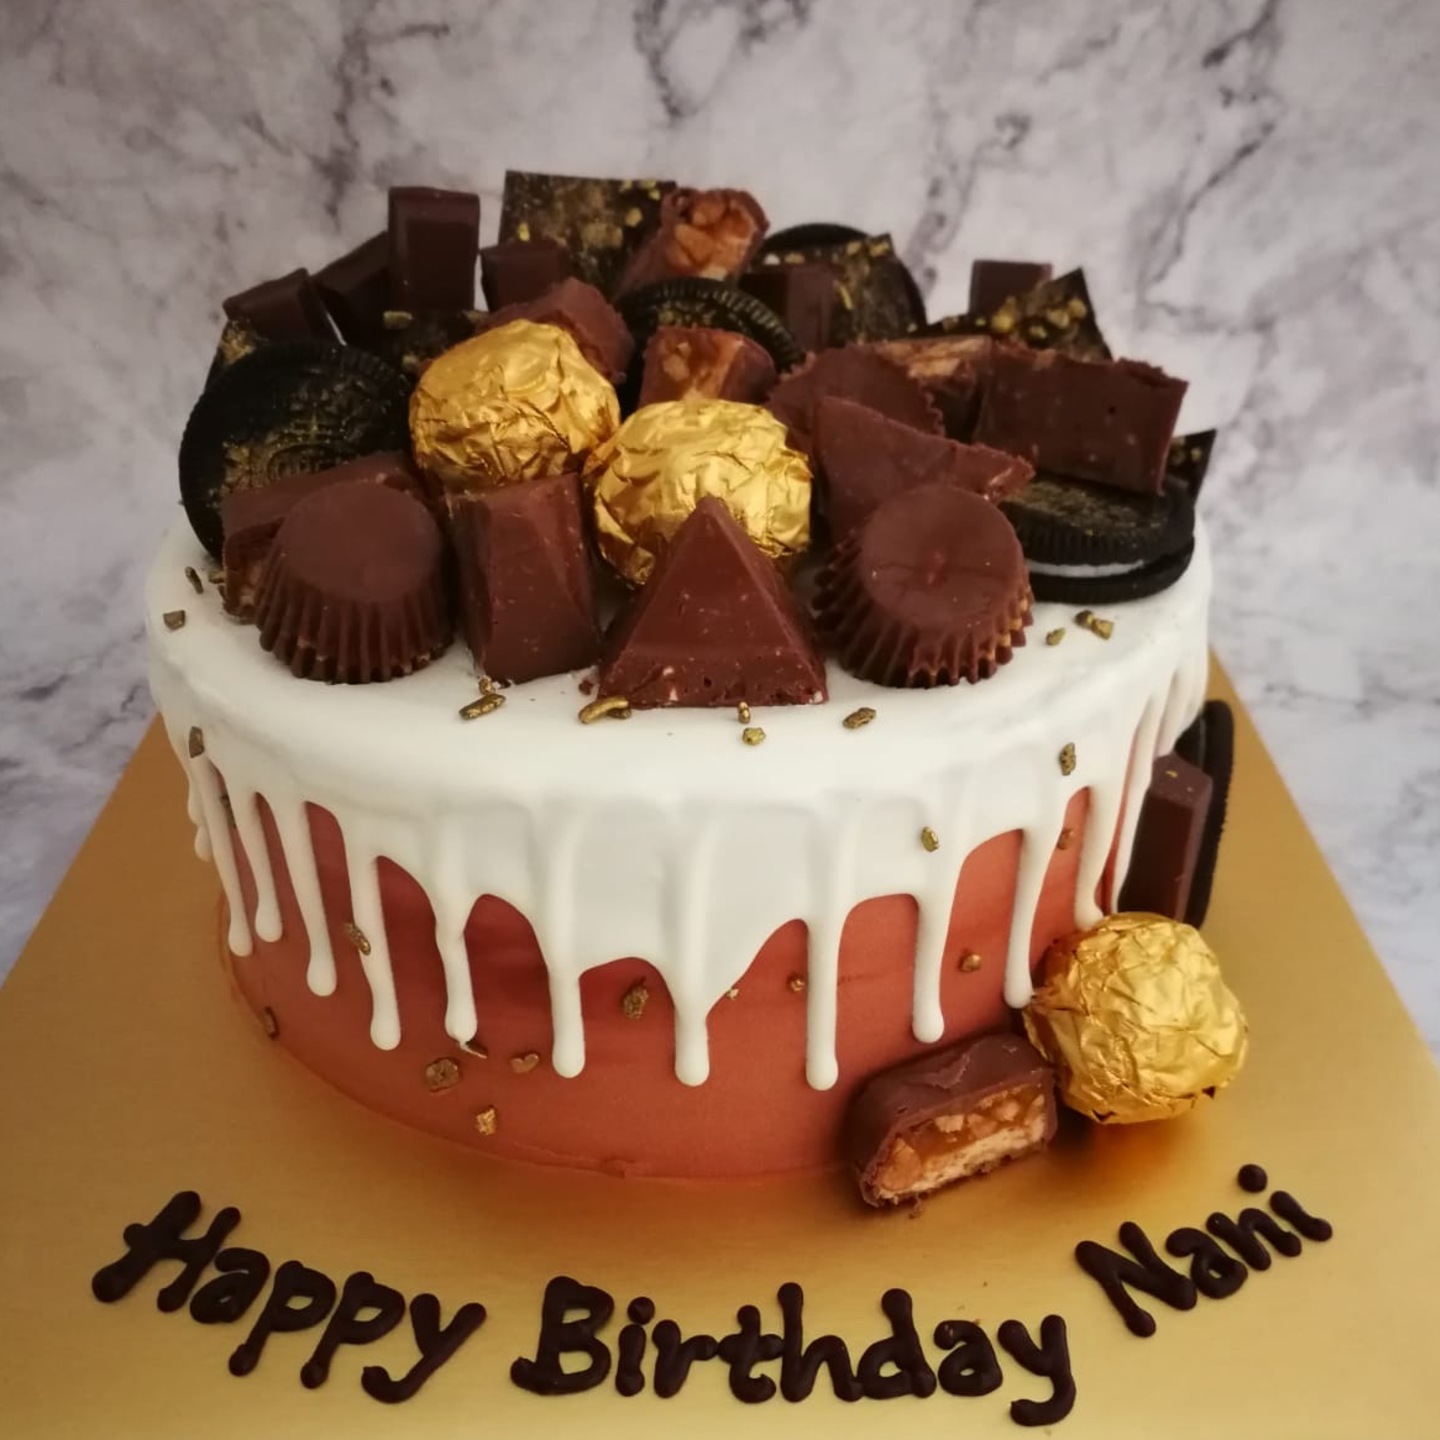 Cake Order - Chocolate Truffle 1 kg